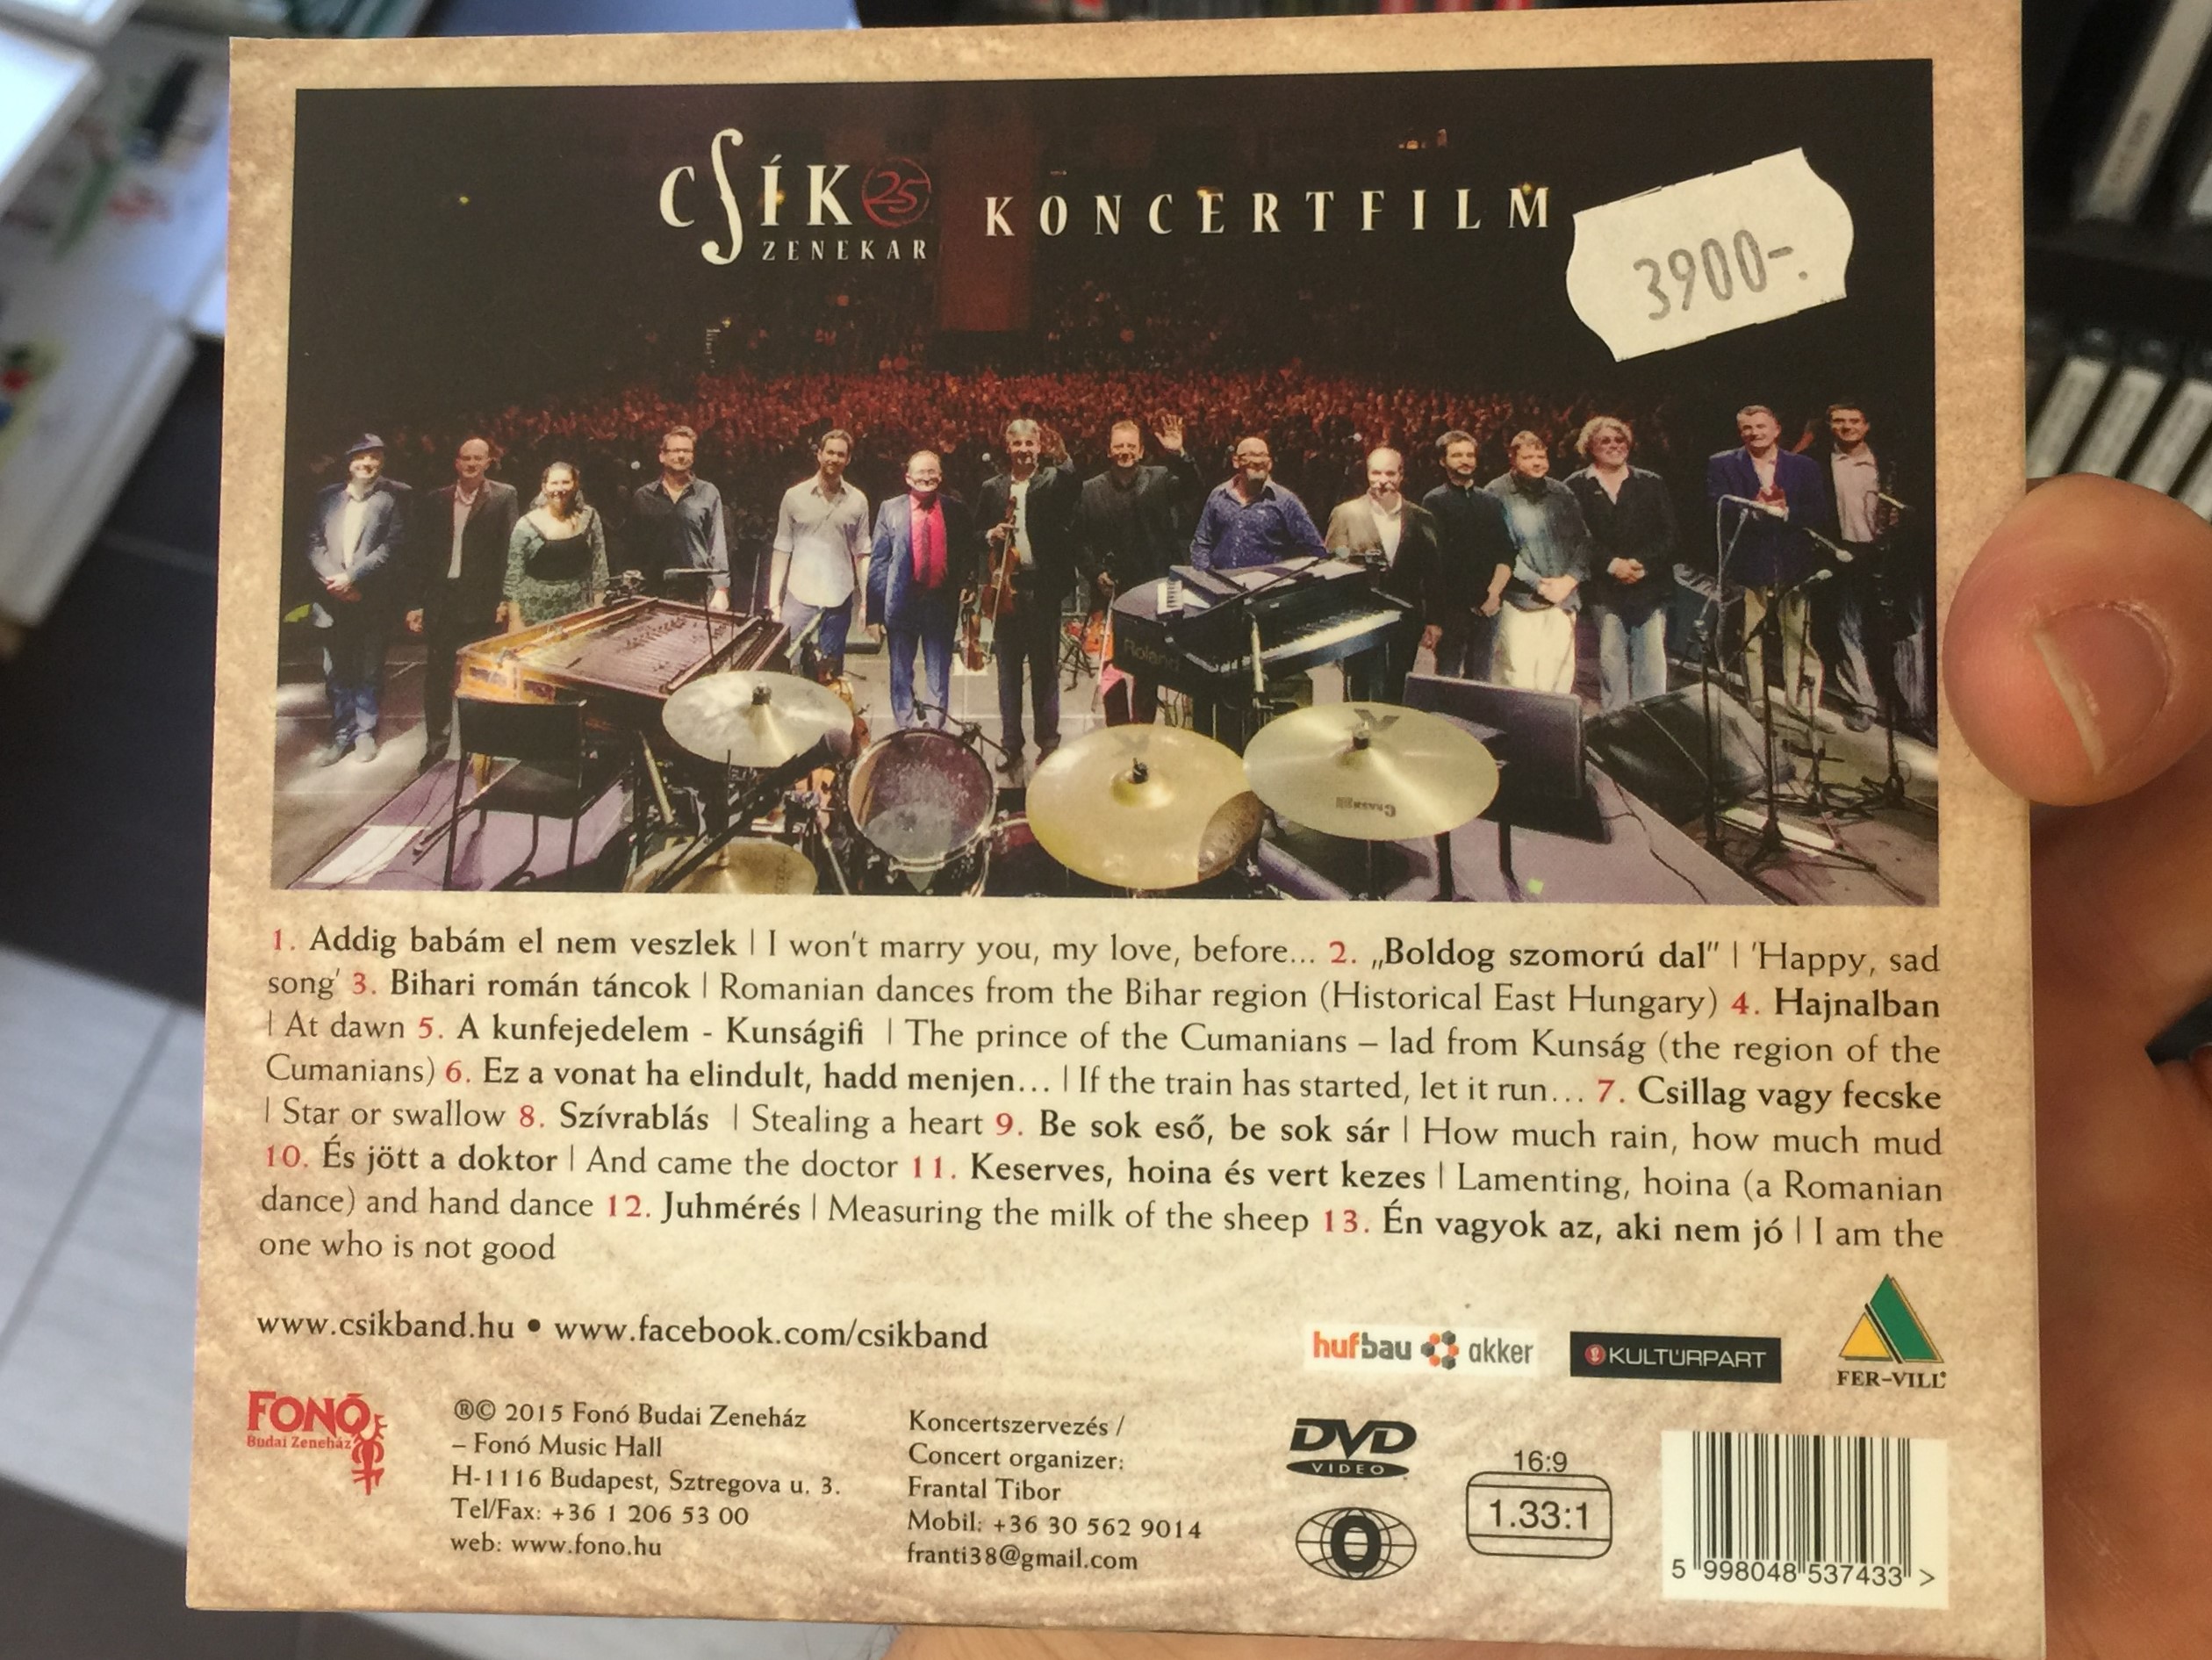 cs-k-zenekar-25-koncertfilm-fon-budai-zeneh-z-dvd-cd-2015-5998048537433-2-.jpg